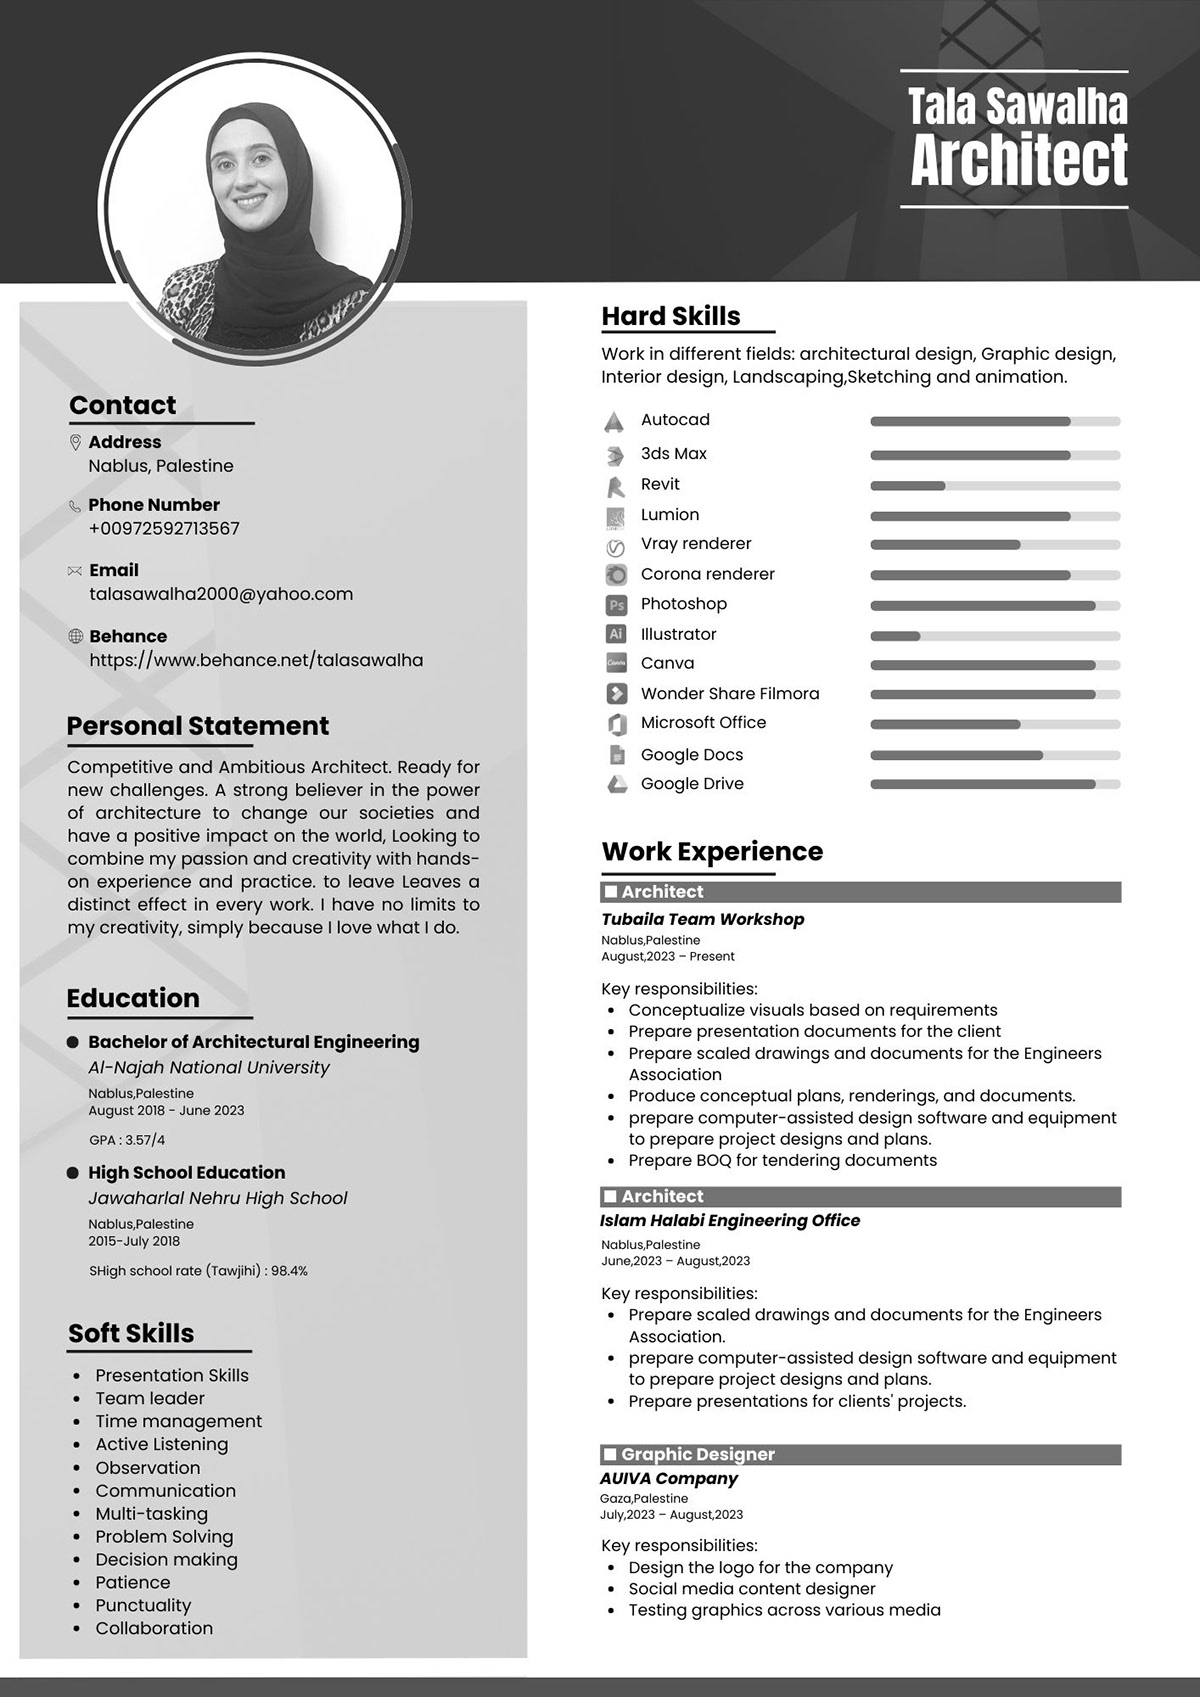 CV CV template resume design Resume cv design Curriculum Vitae template black and white grey black